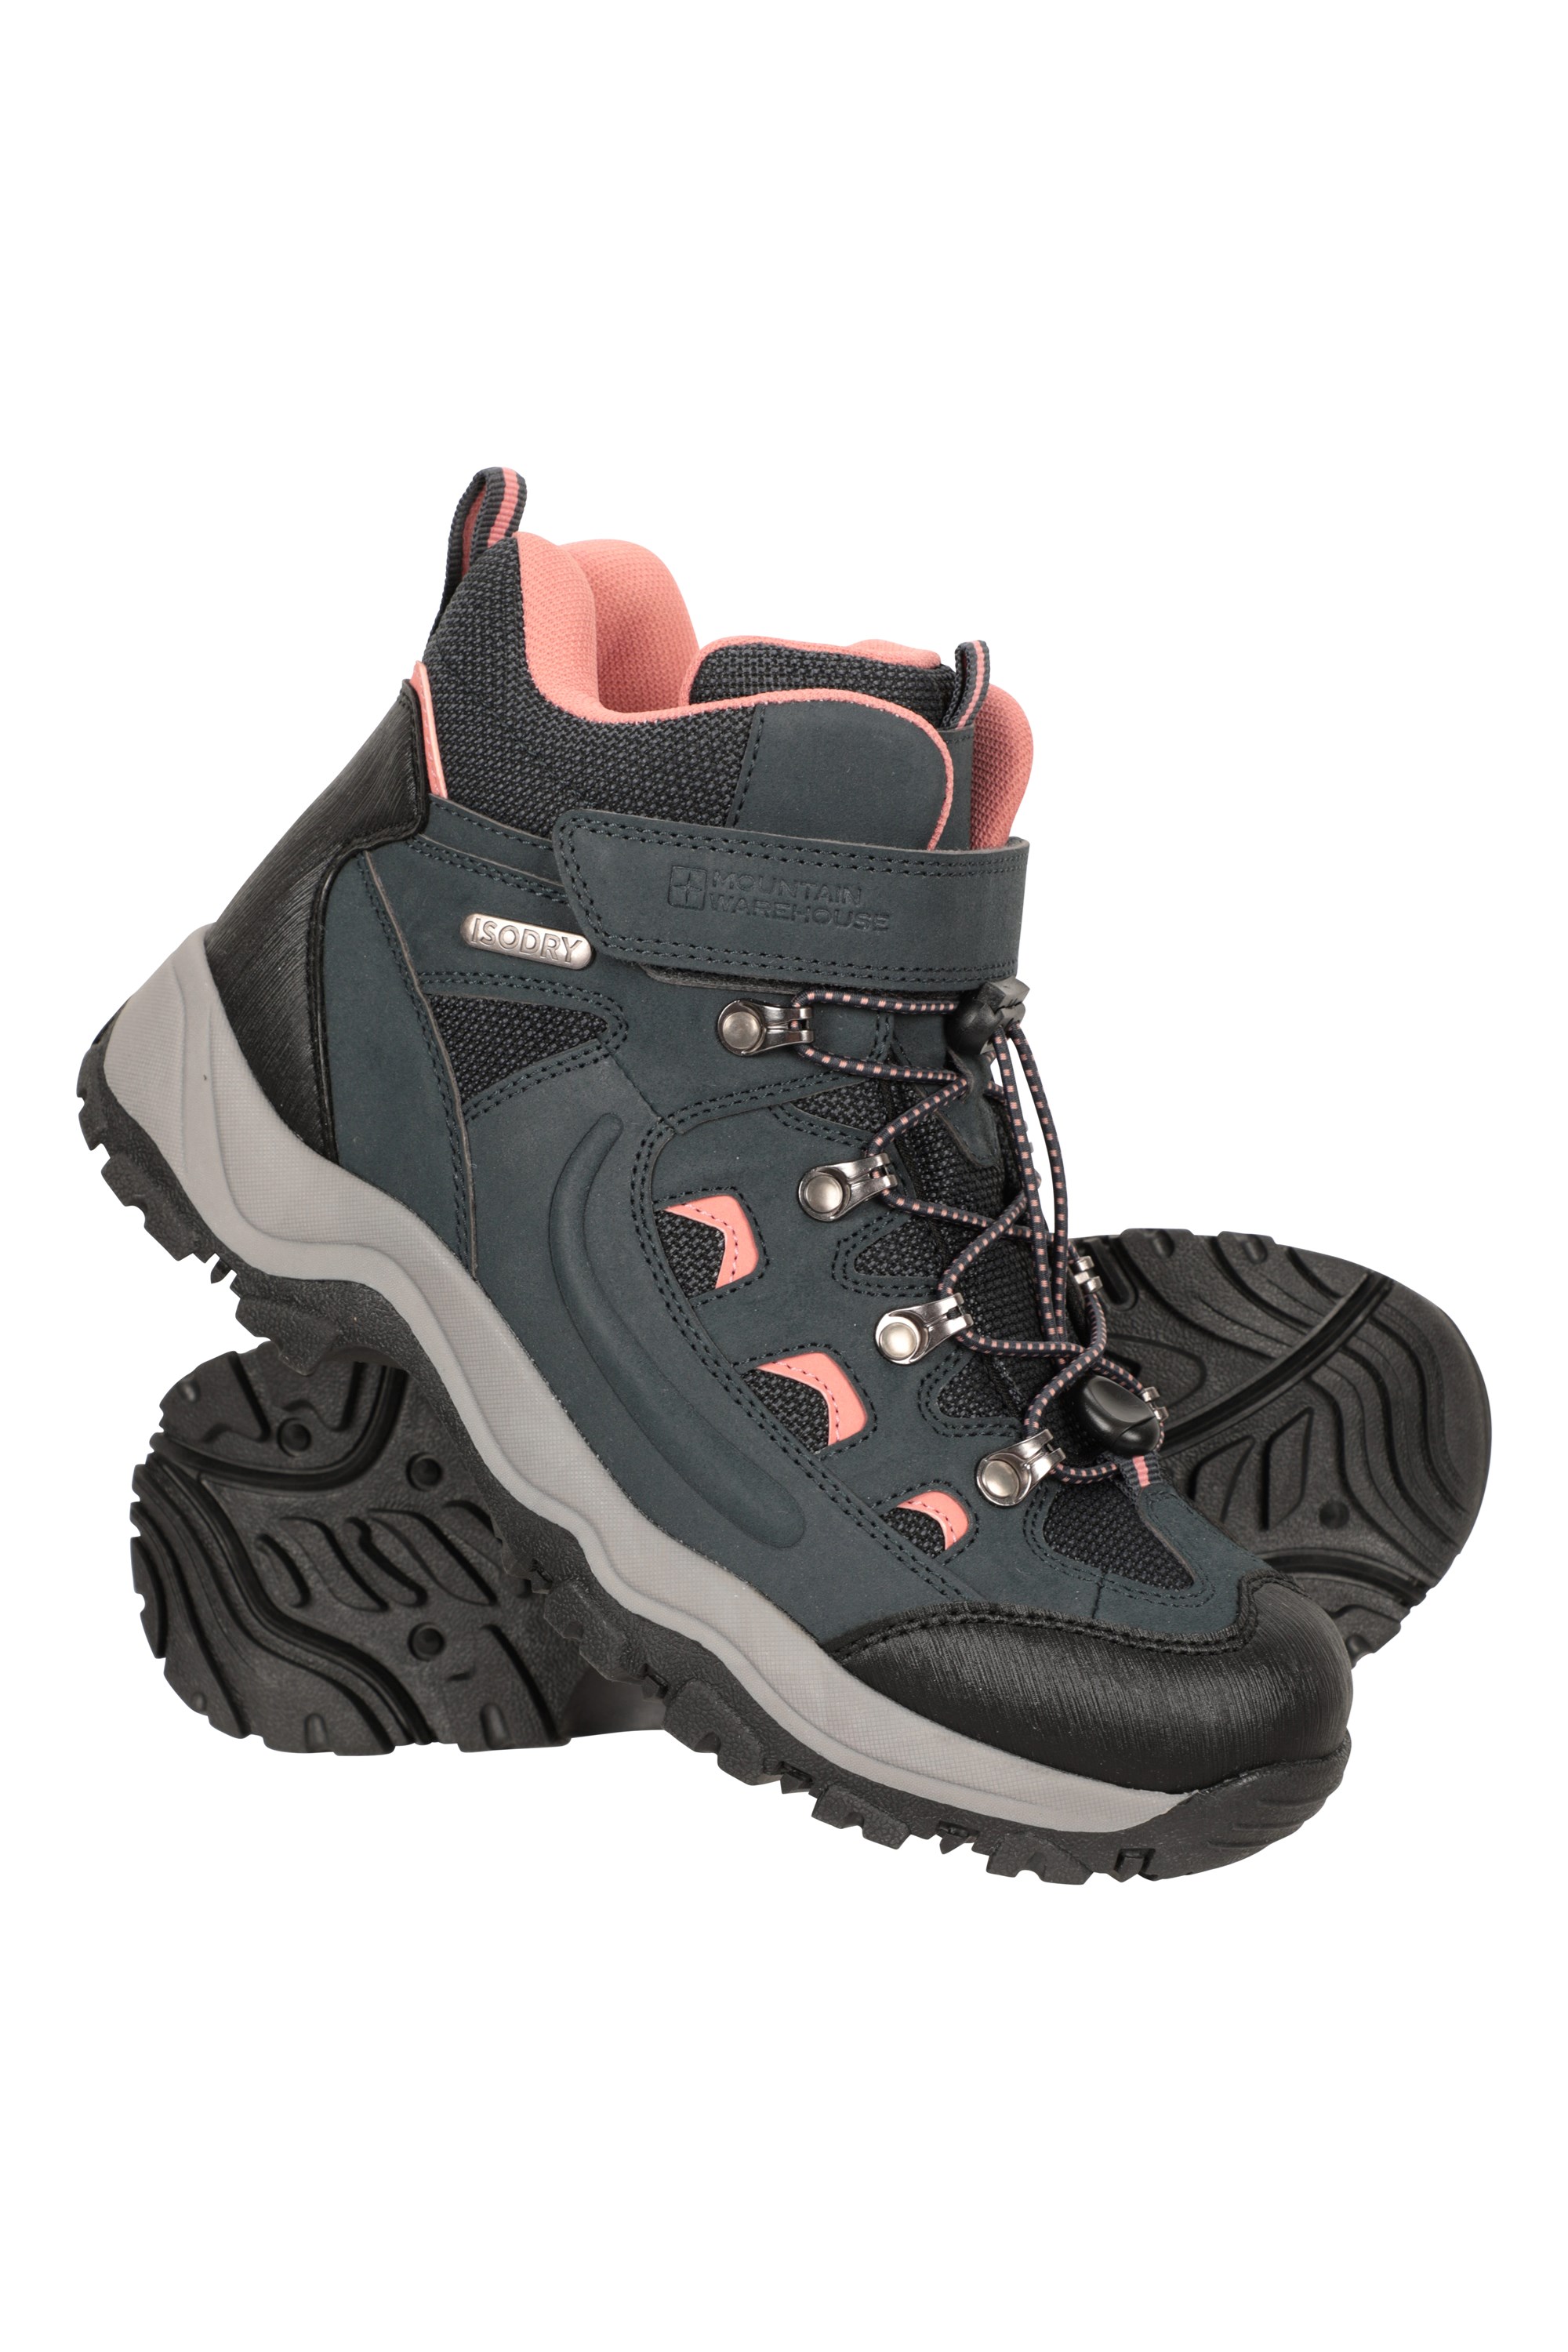 Adventurer Womens Adaptive Waterproof Boots - Grey